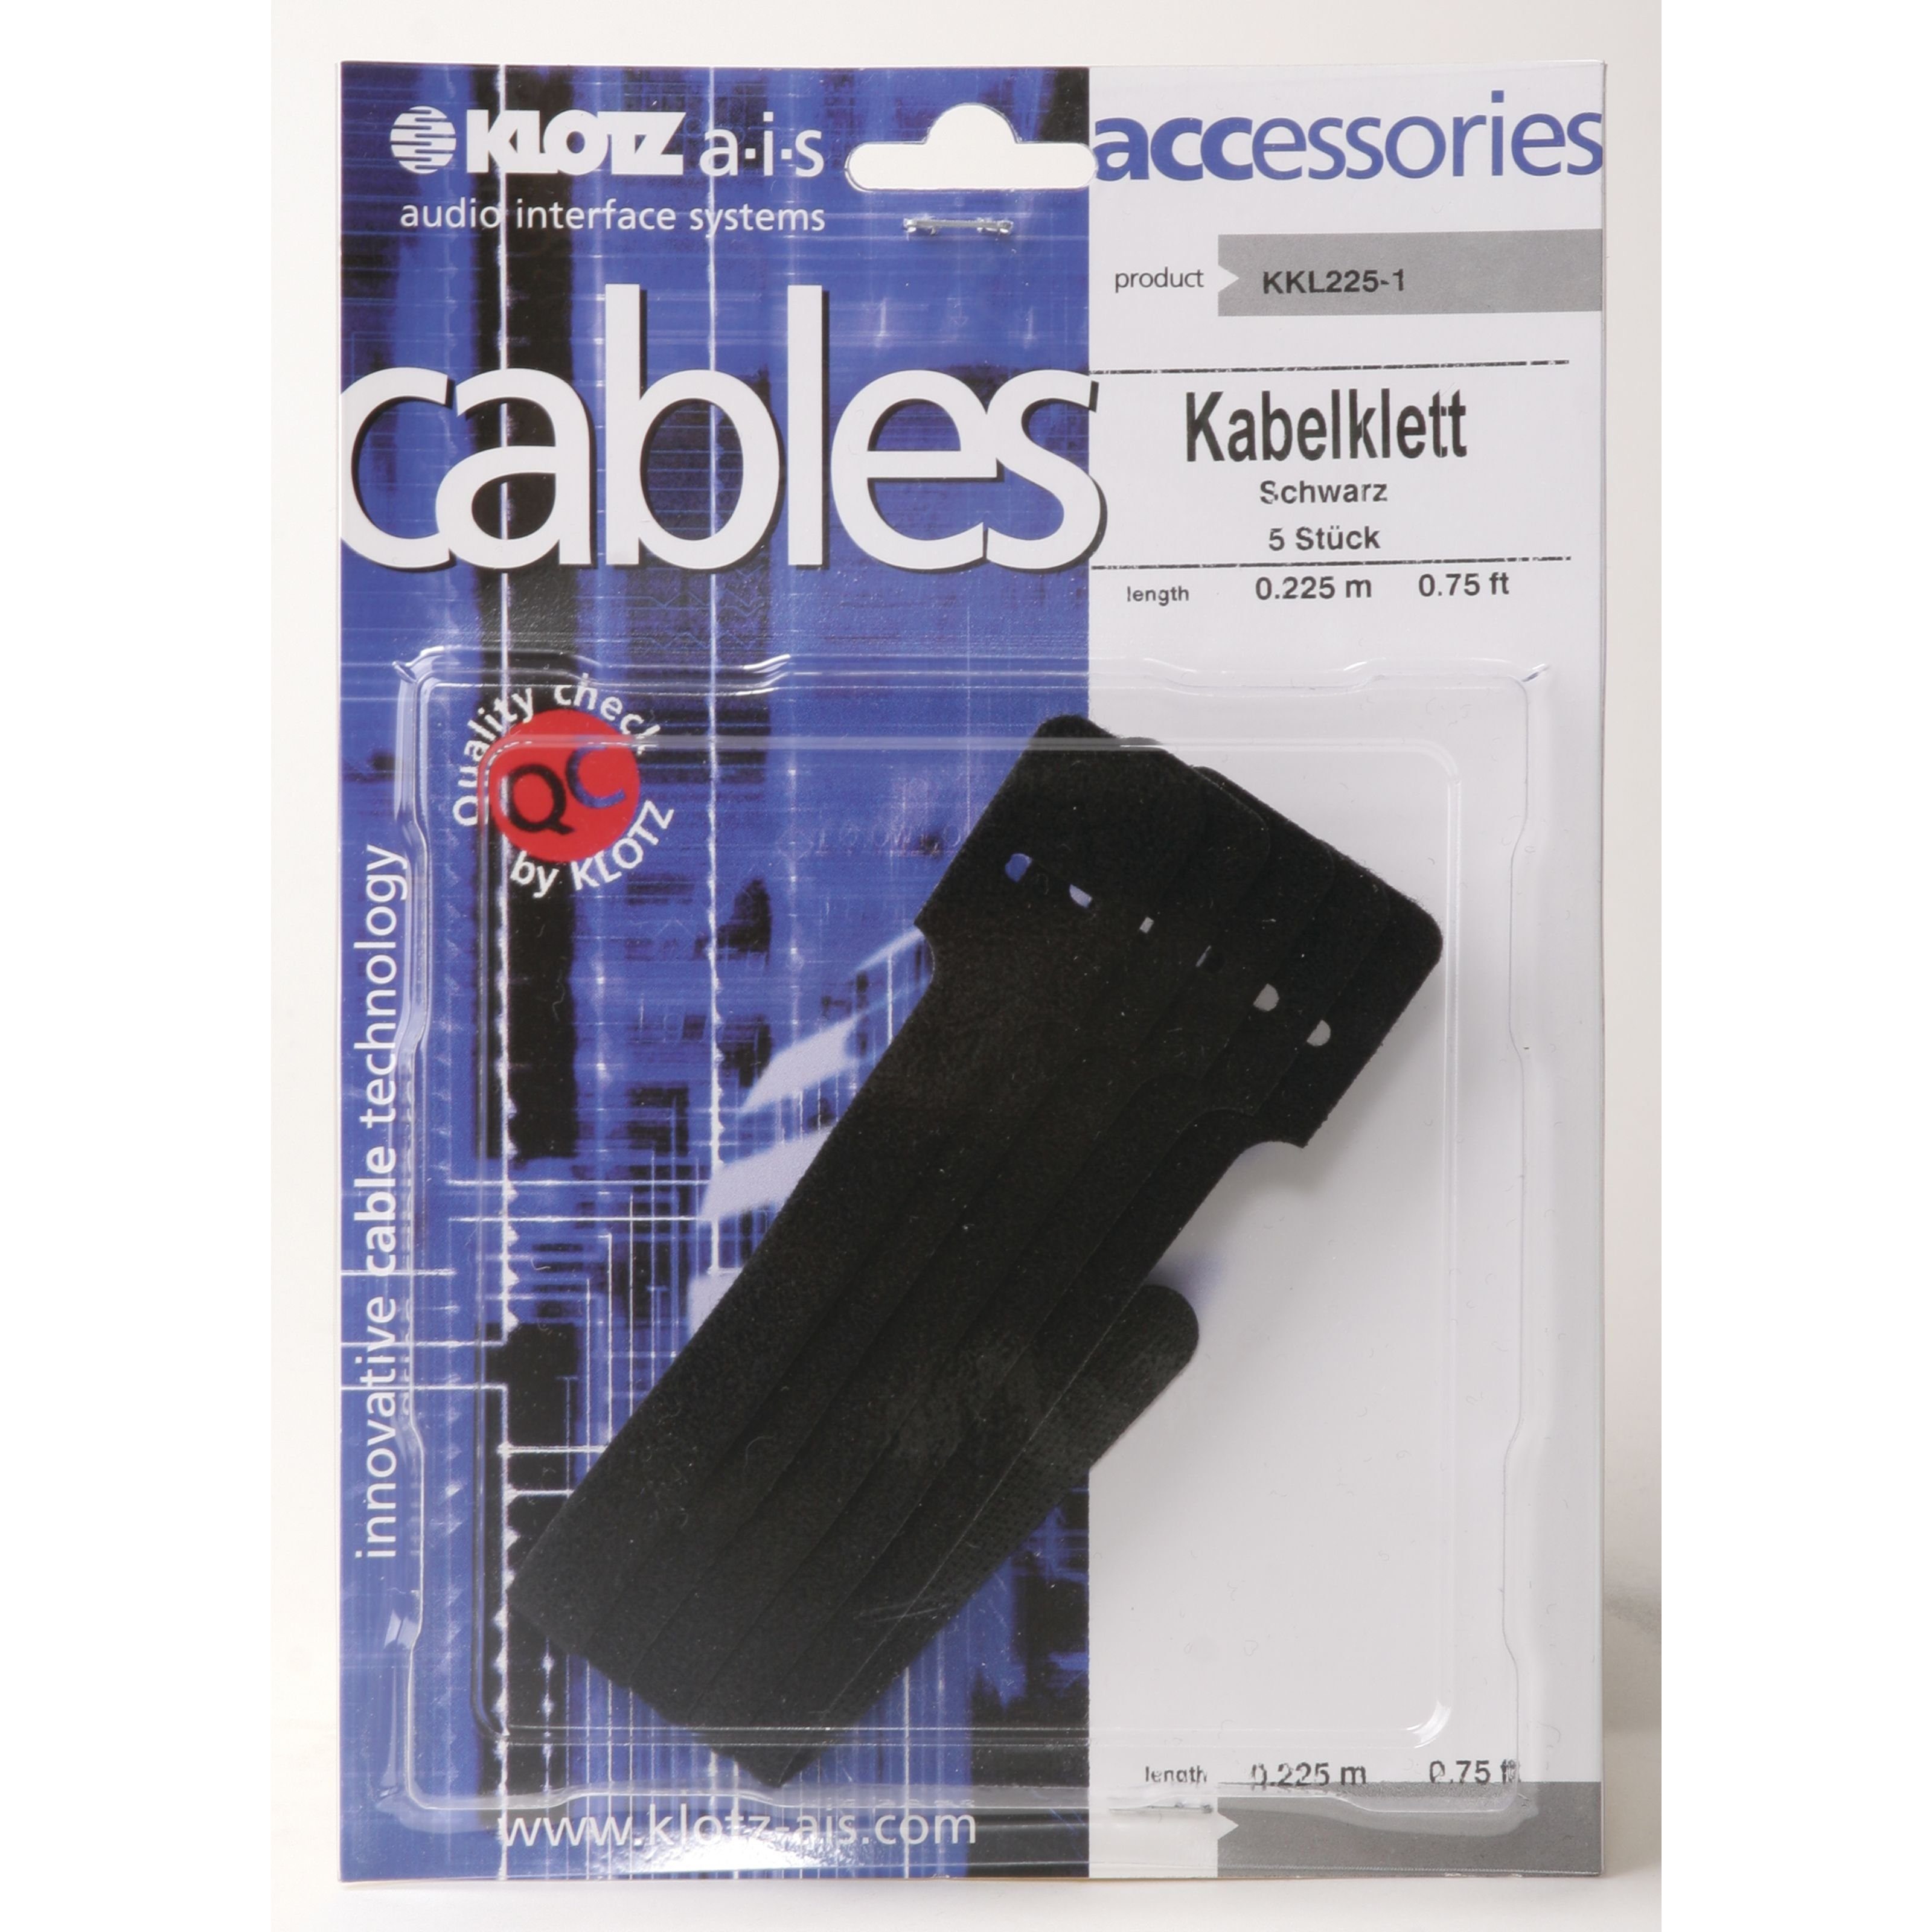 Spielzeug-Musikinstrument, Kabelklette Stück 5 - KKL225-1 schwarz, Klotz Cables Stofföse Kabelklett